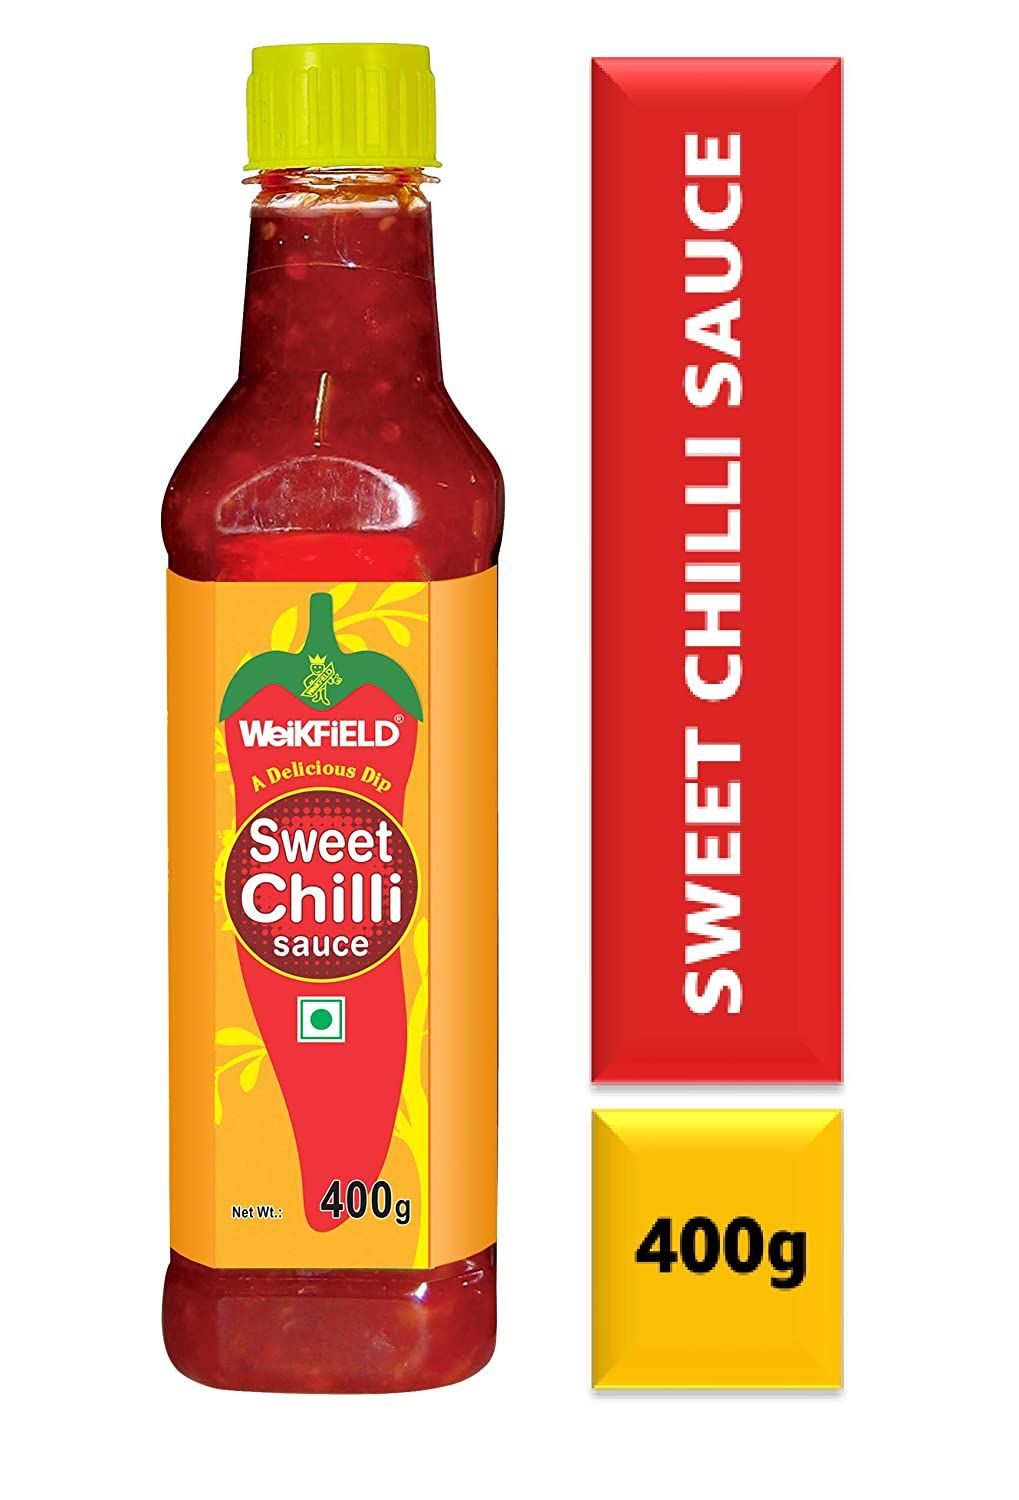 Weikfield Sweet Chilli Sauce Image